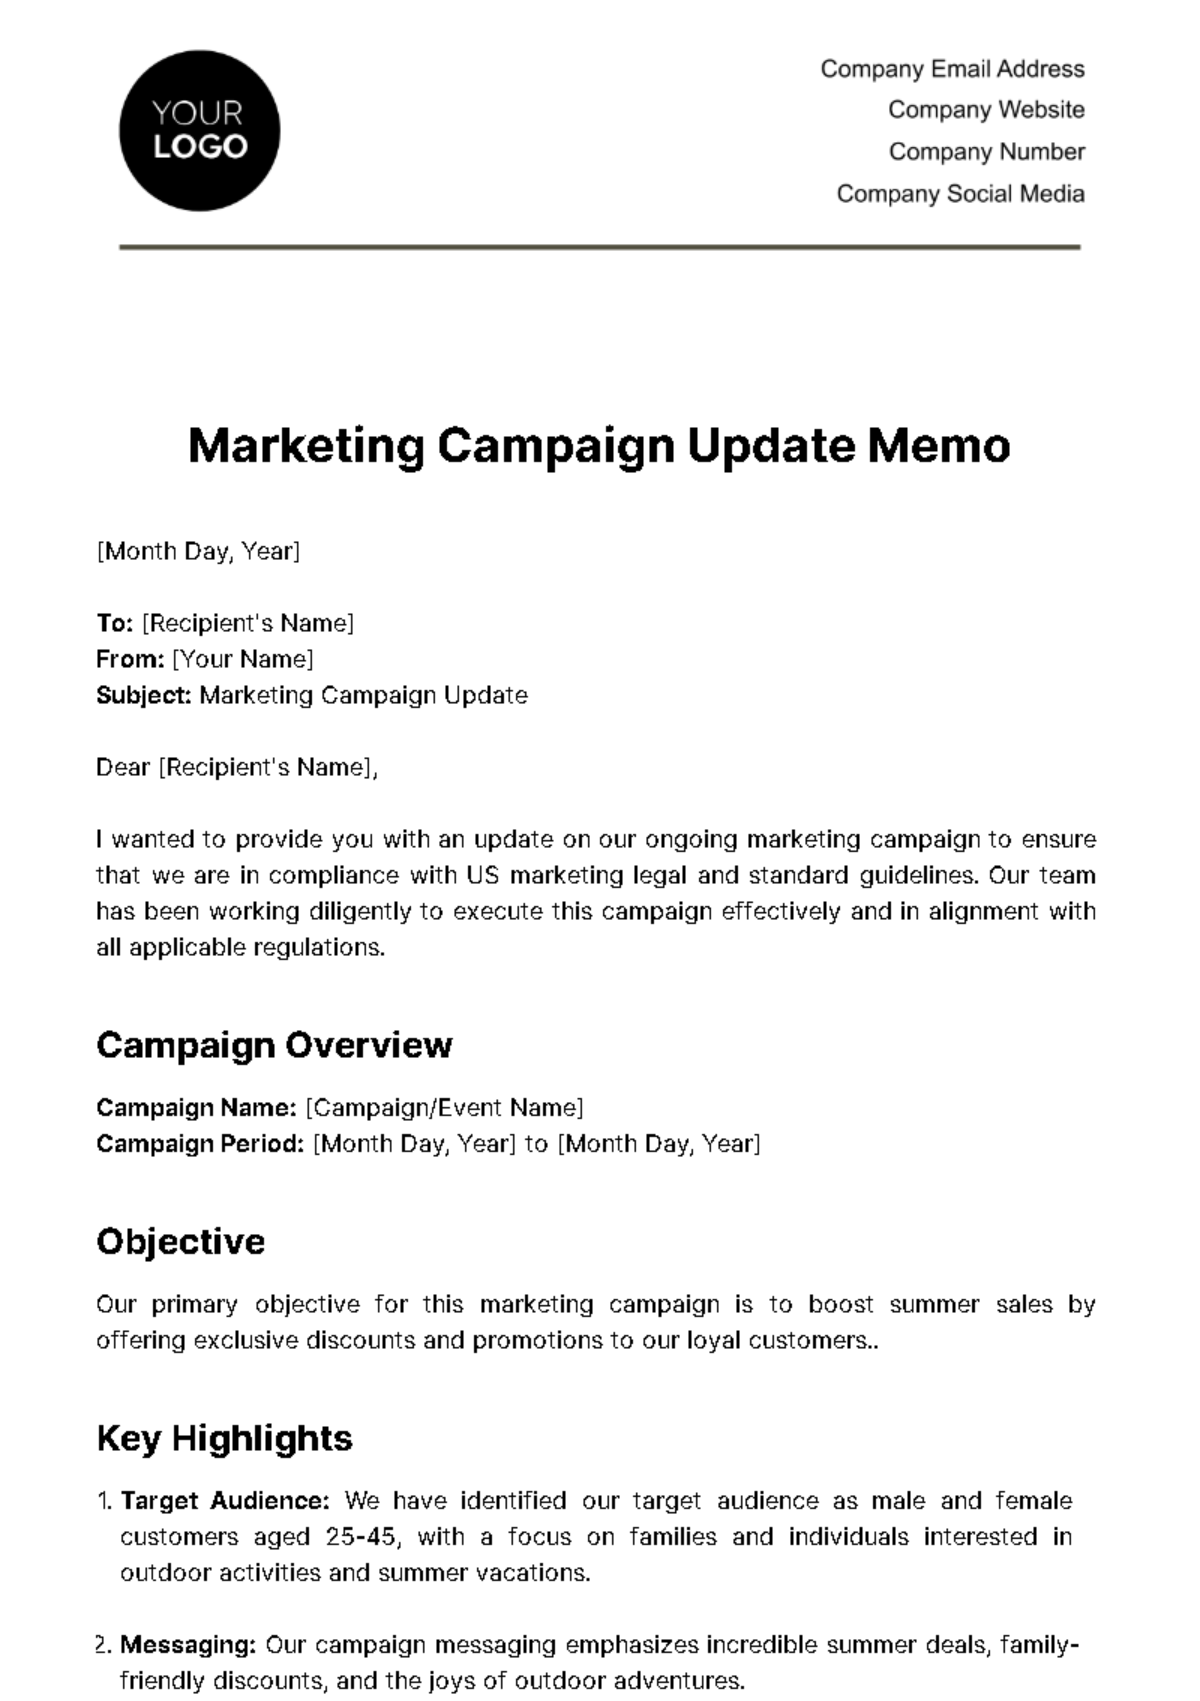 Marketing Campaign Update Memo Template